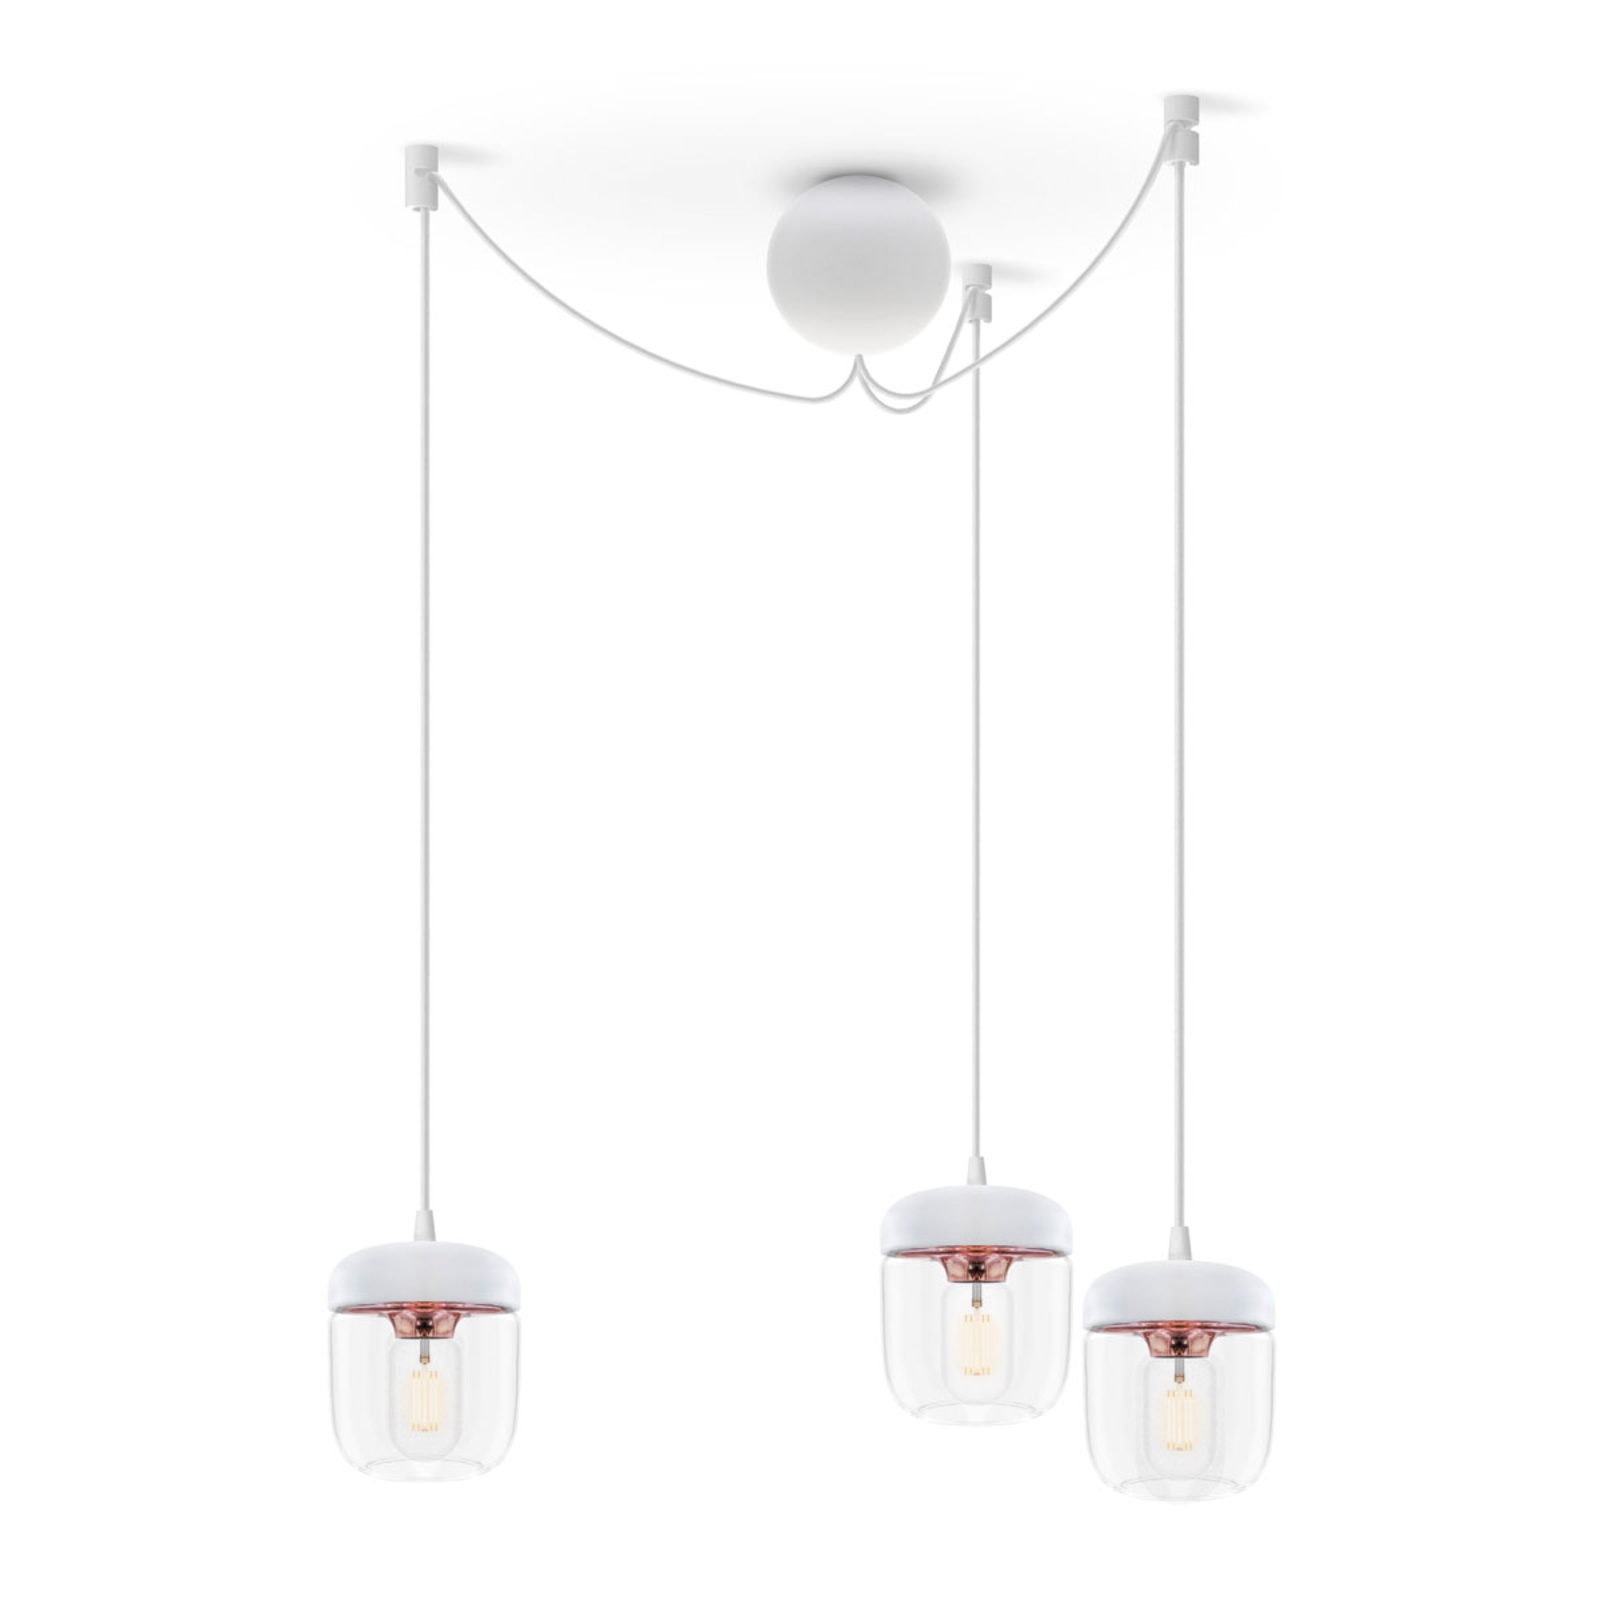 UMAGE Acorn hanglamp, wit/koper, 3 lampen